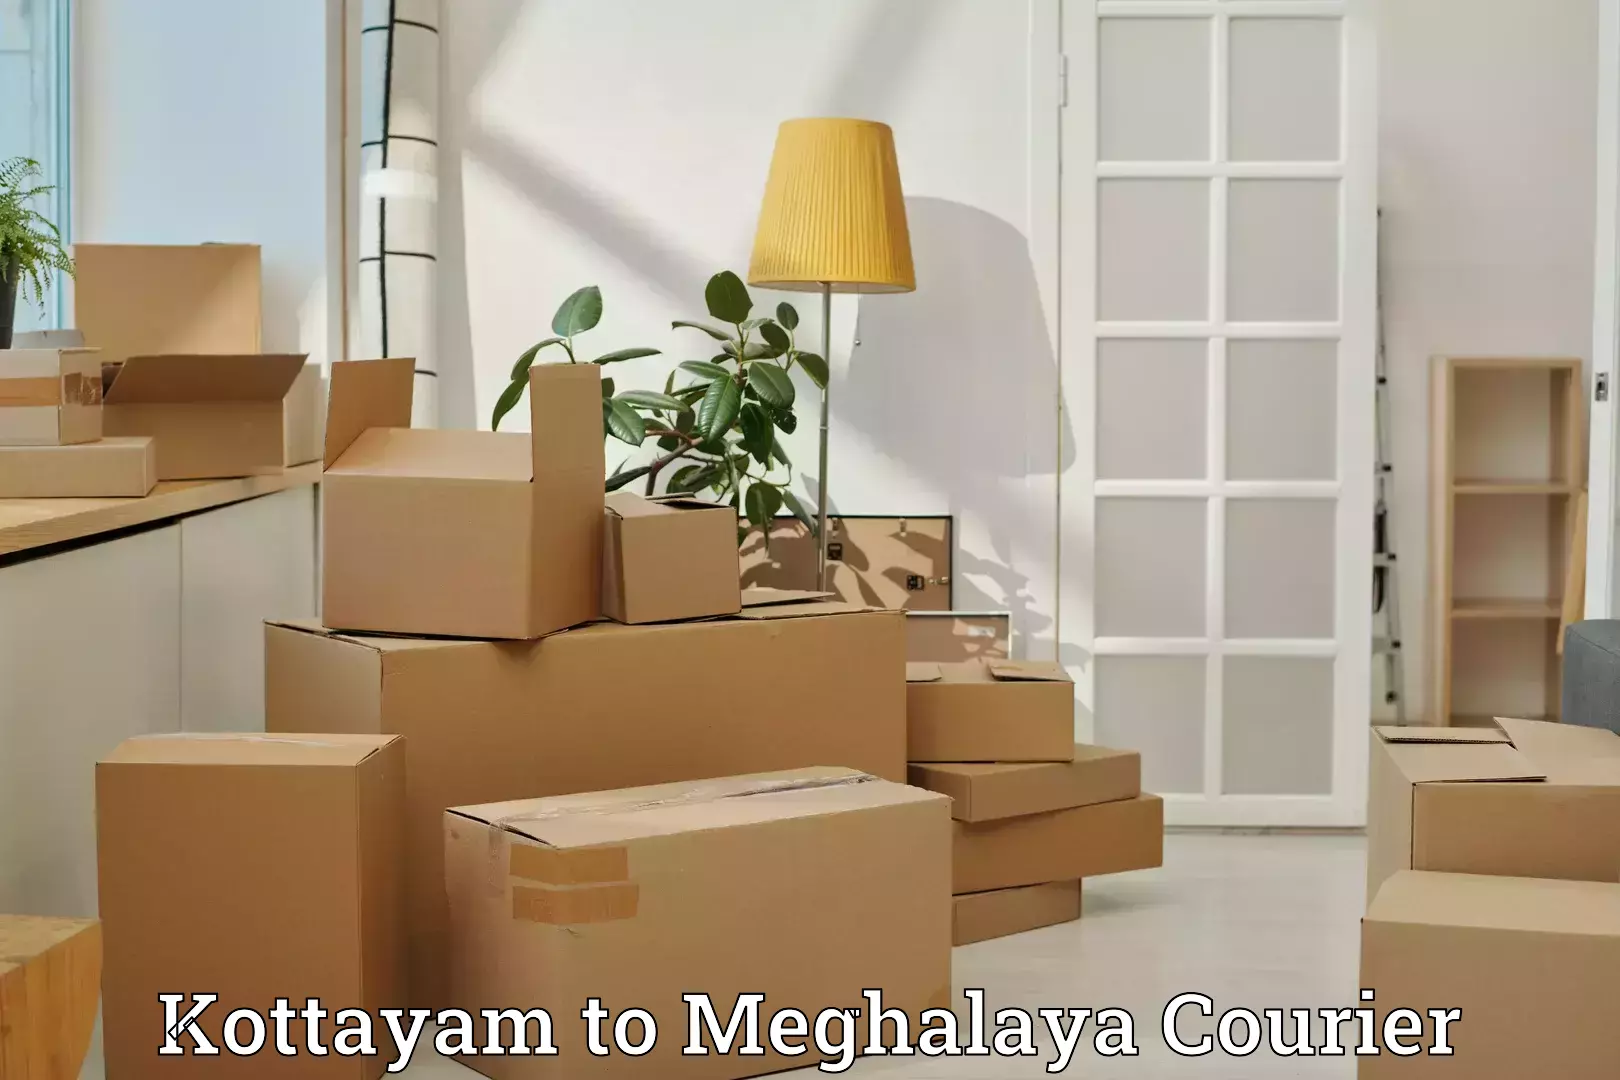 Luggage shipping specialists Kottayam to Meghalaya